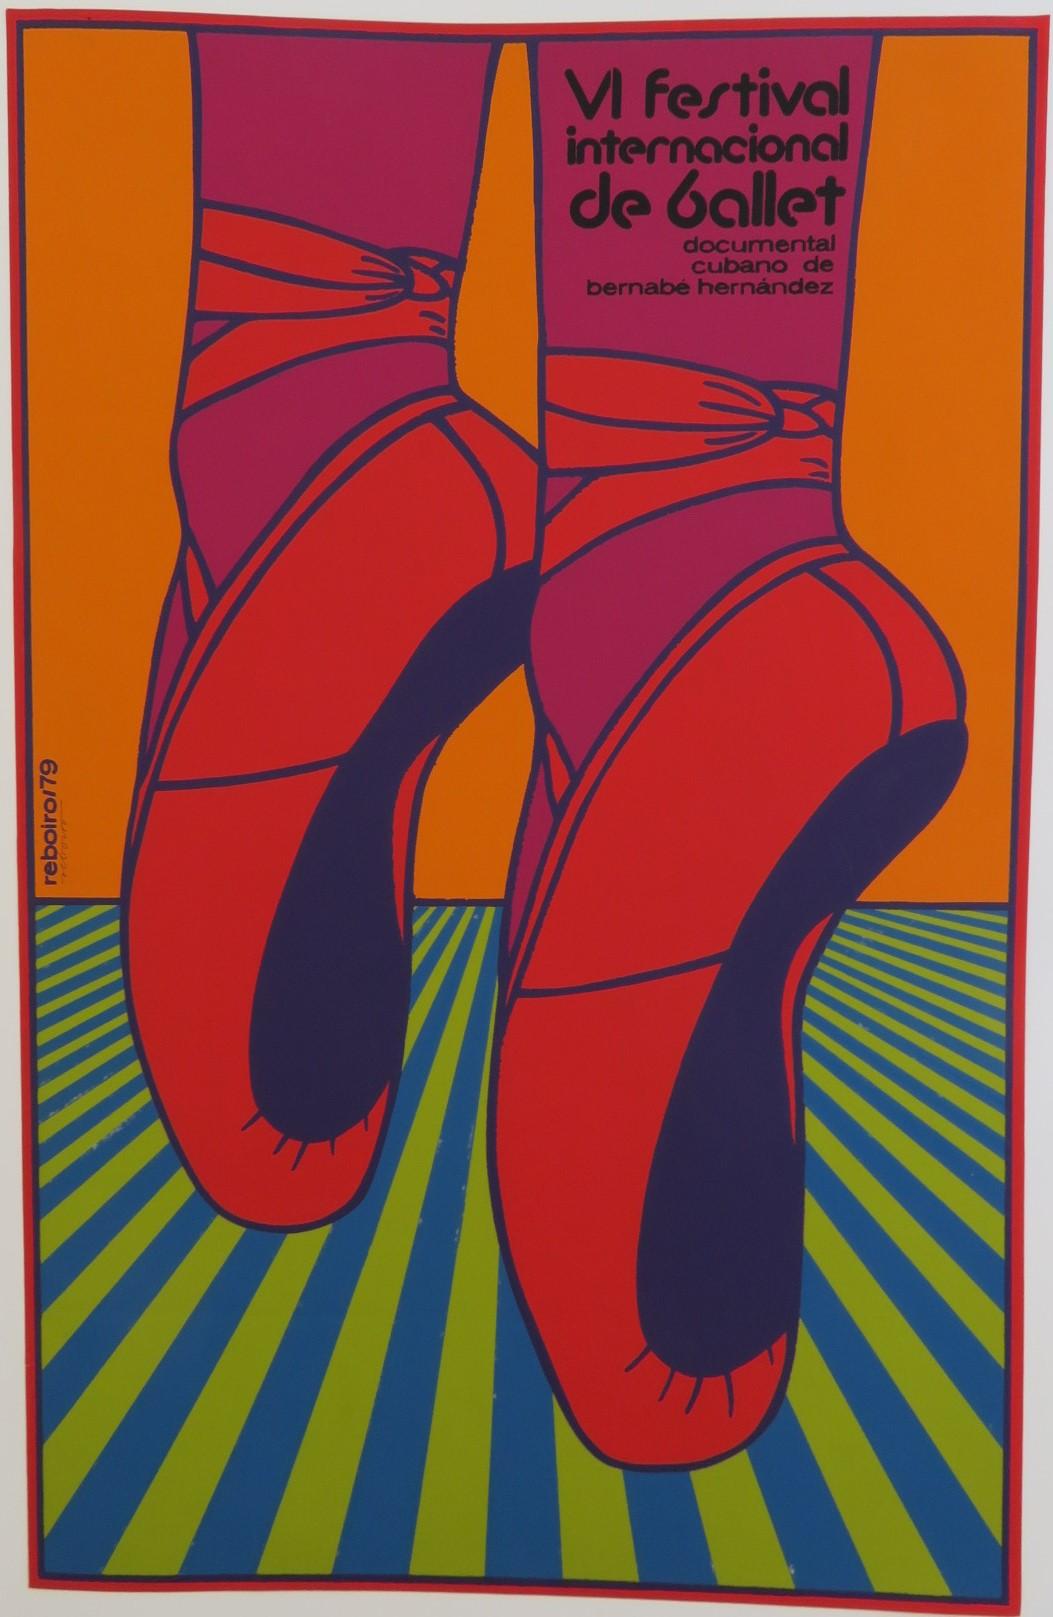 1979 Cuban Poster by Reboiro for International Ballet Festival Held in Cuba  1